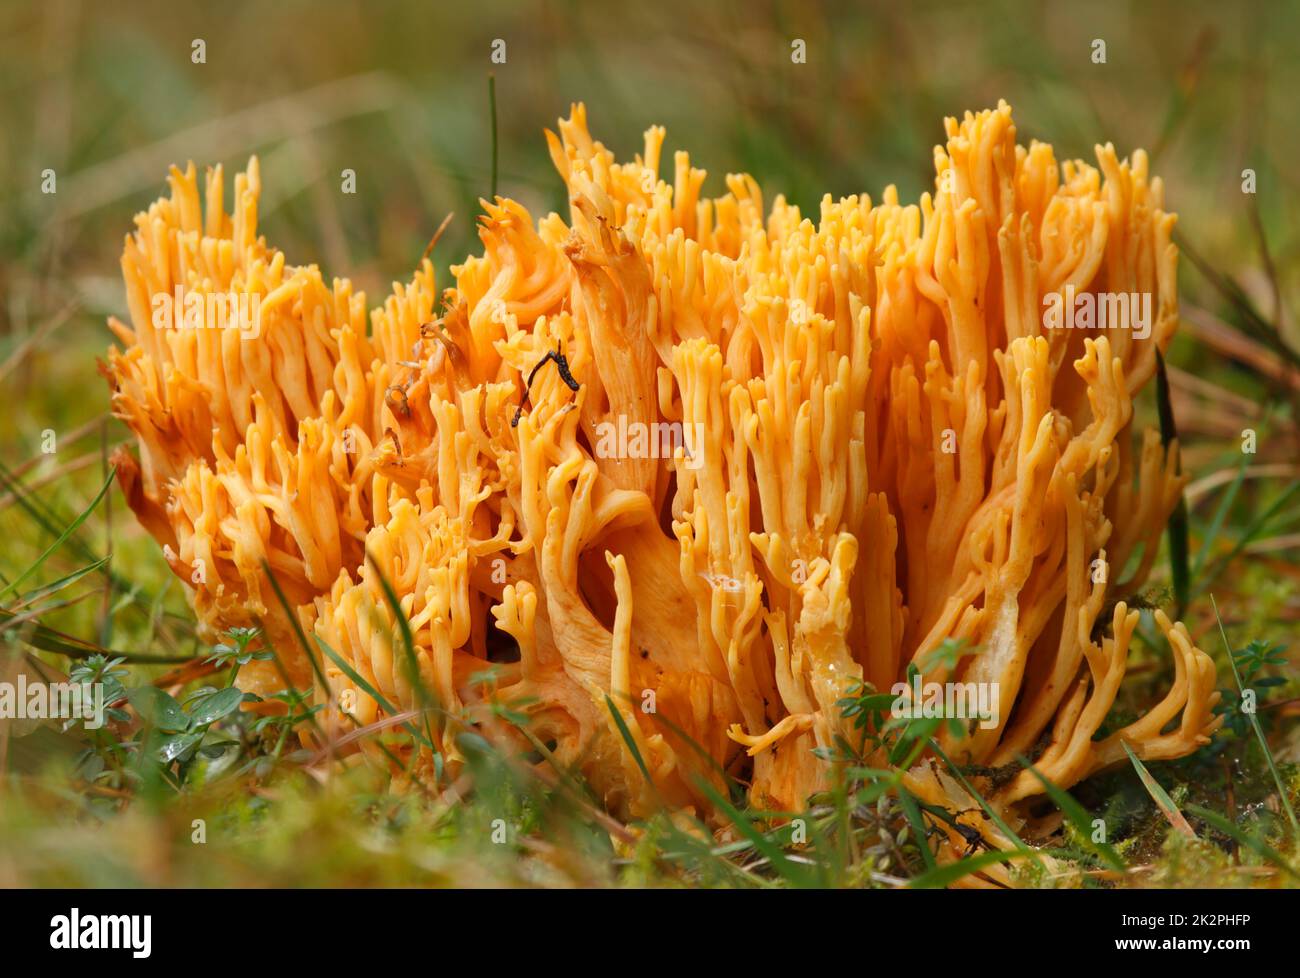 Ramaria aurea mushroom. Yellow coral fungi. Close up view. Stock Photo